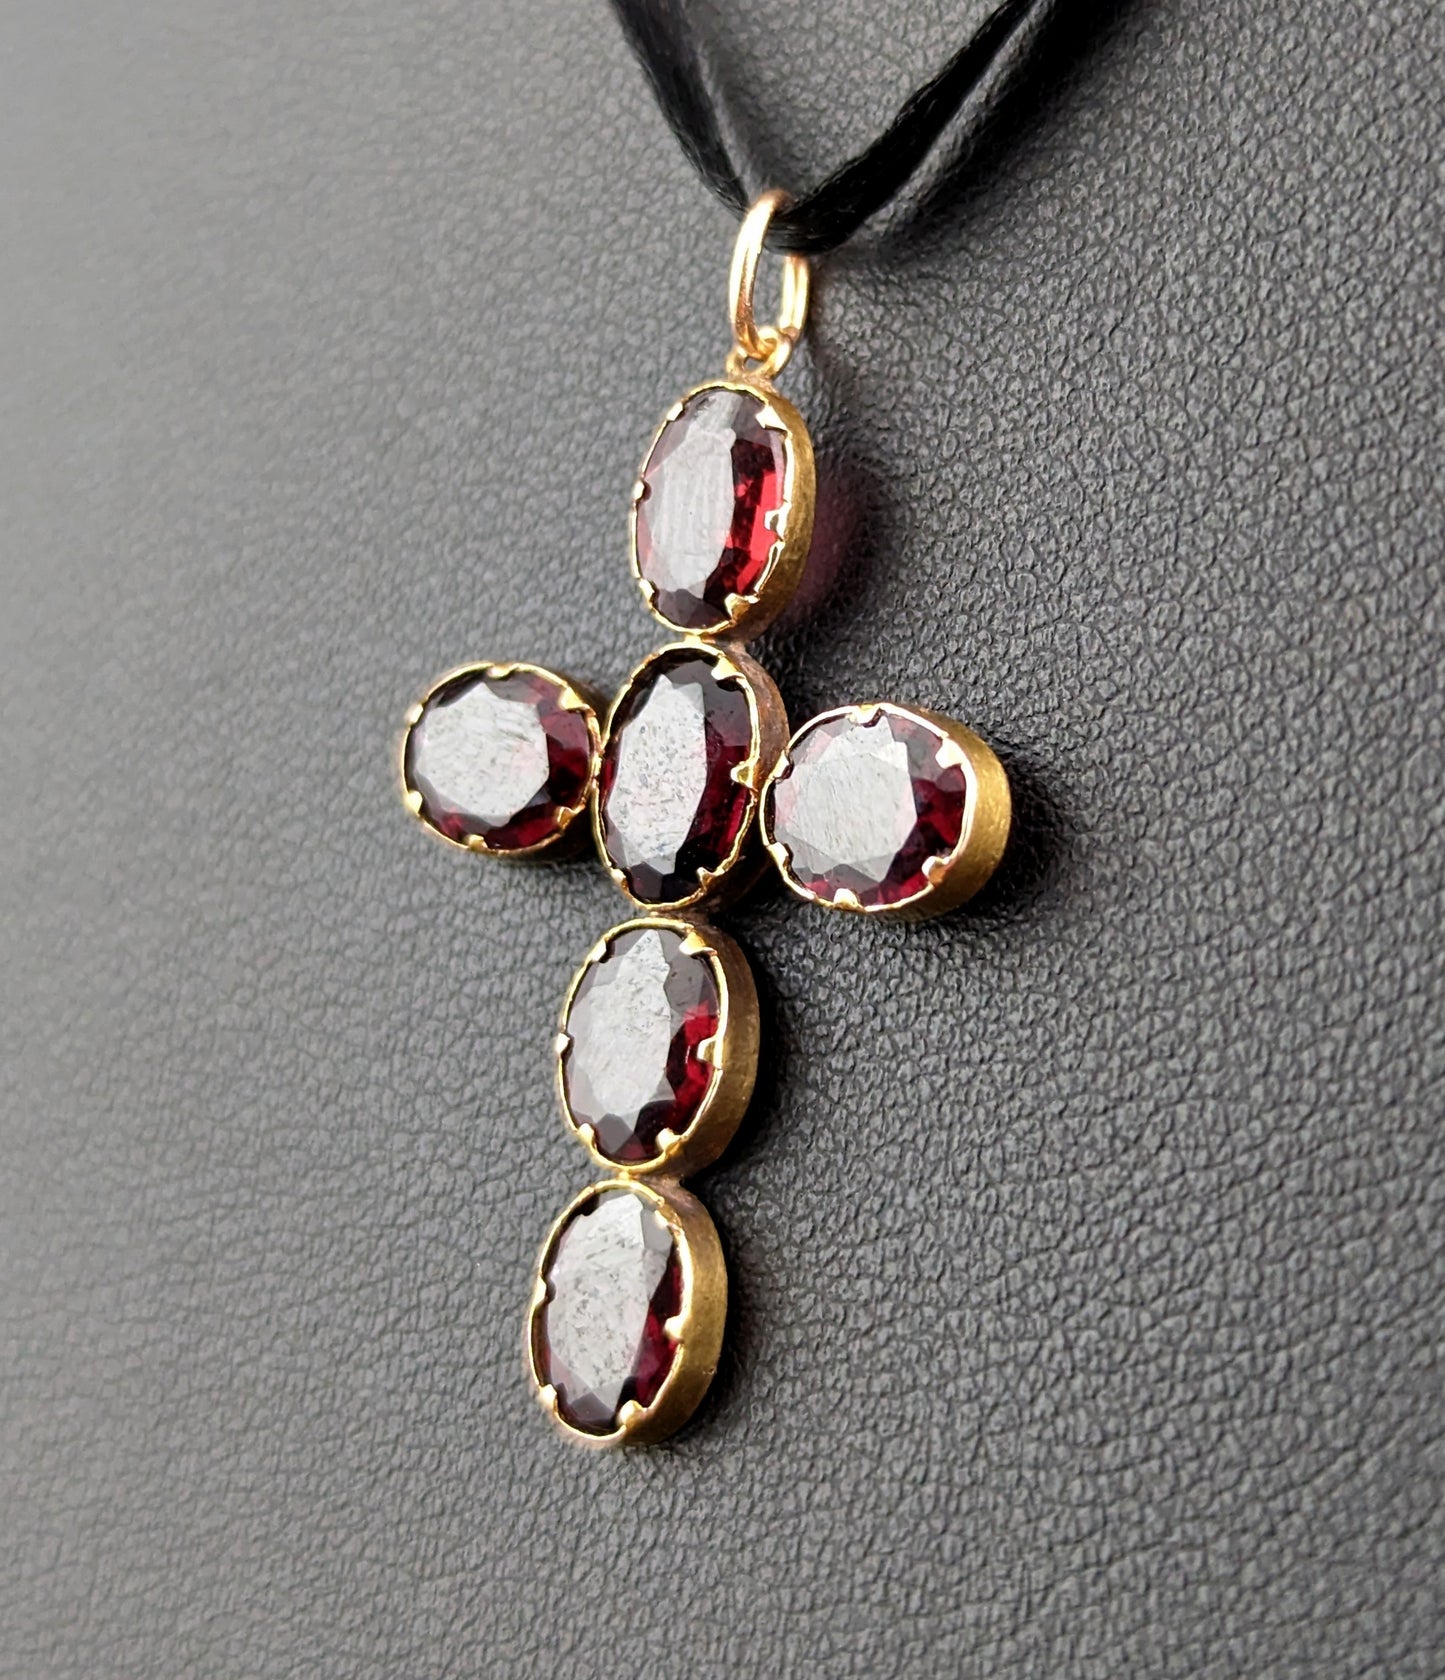 Antique Garnet cross pendant, 18ct gold, Victorian